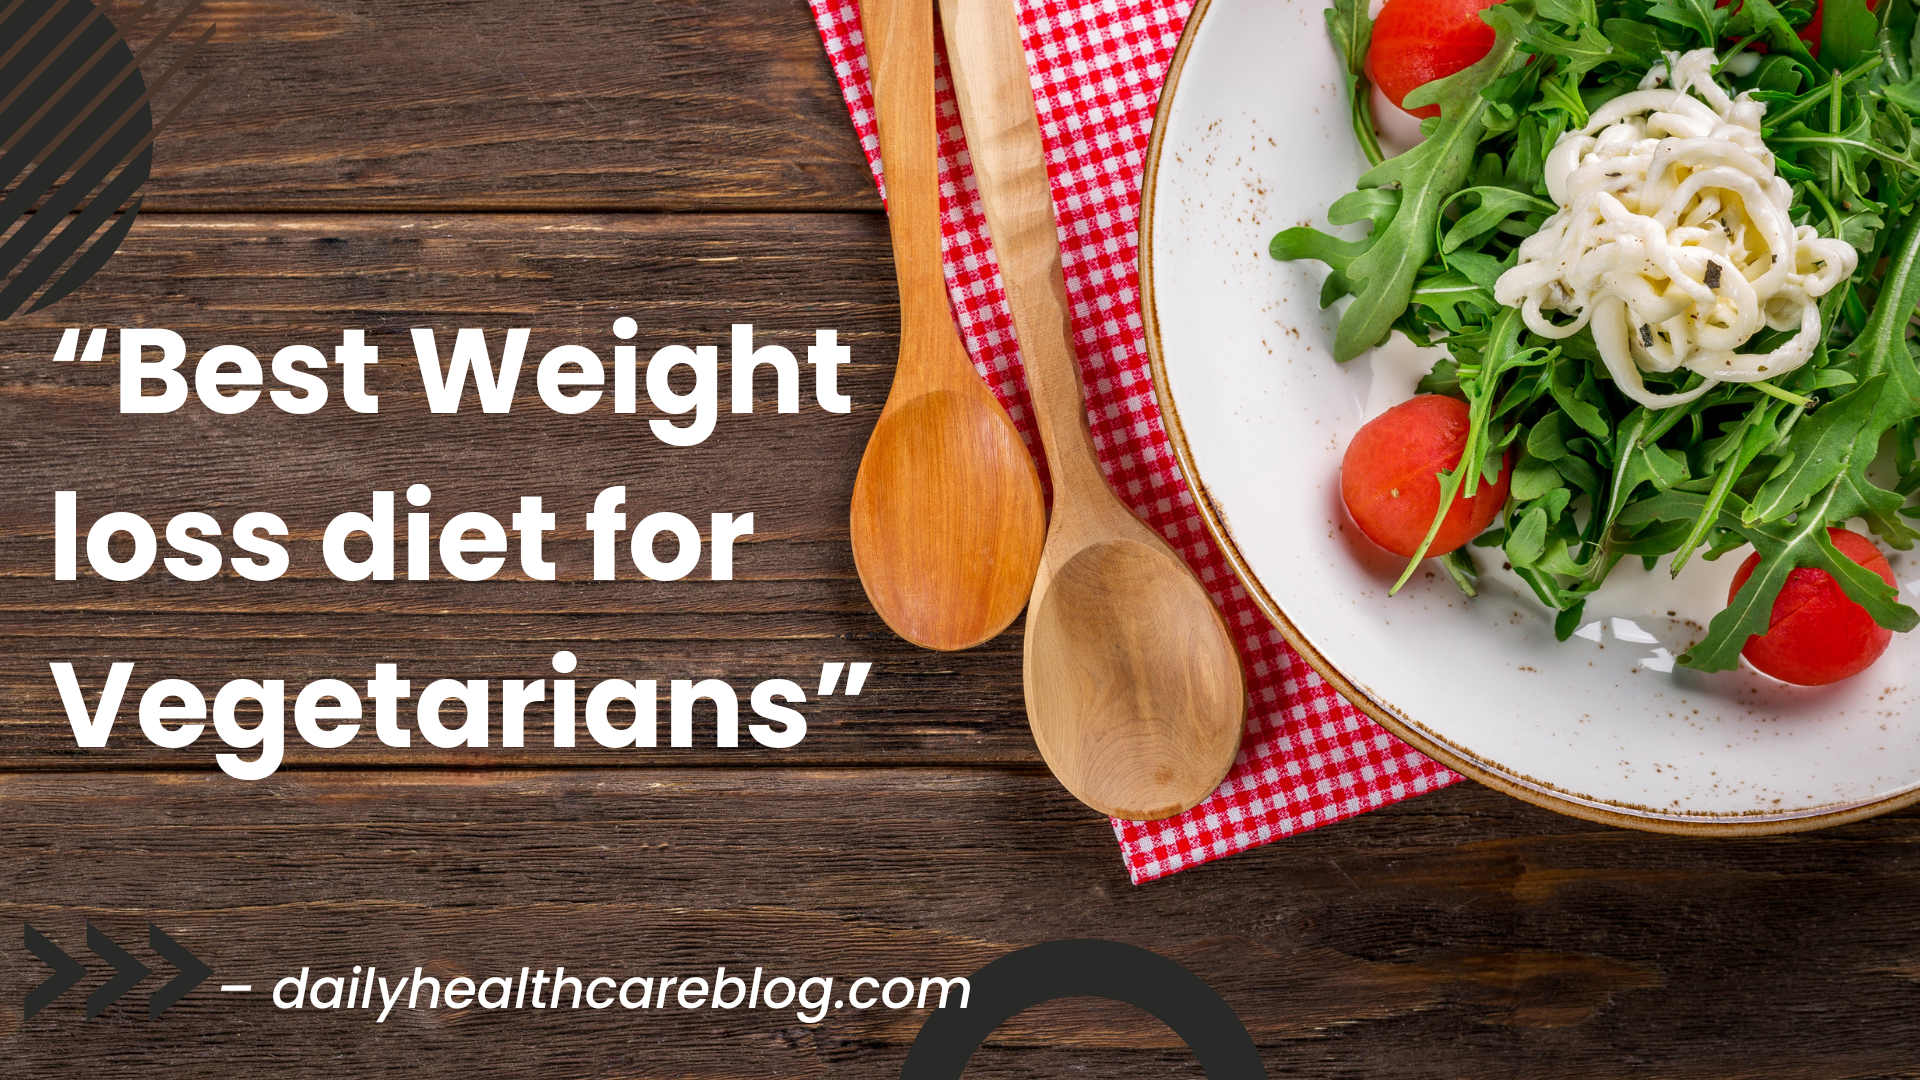 Best Weight loss diet for Vegetarians